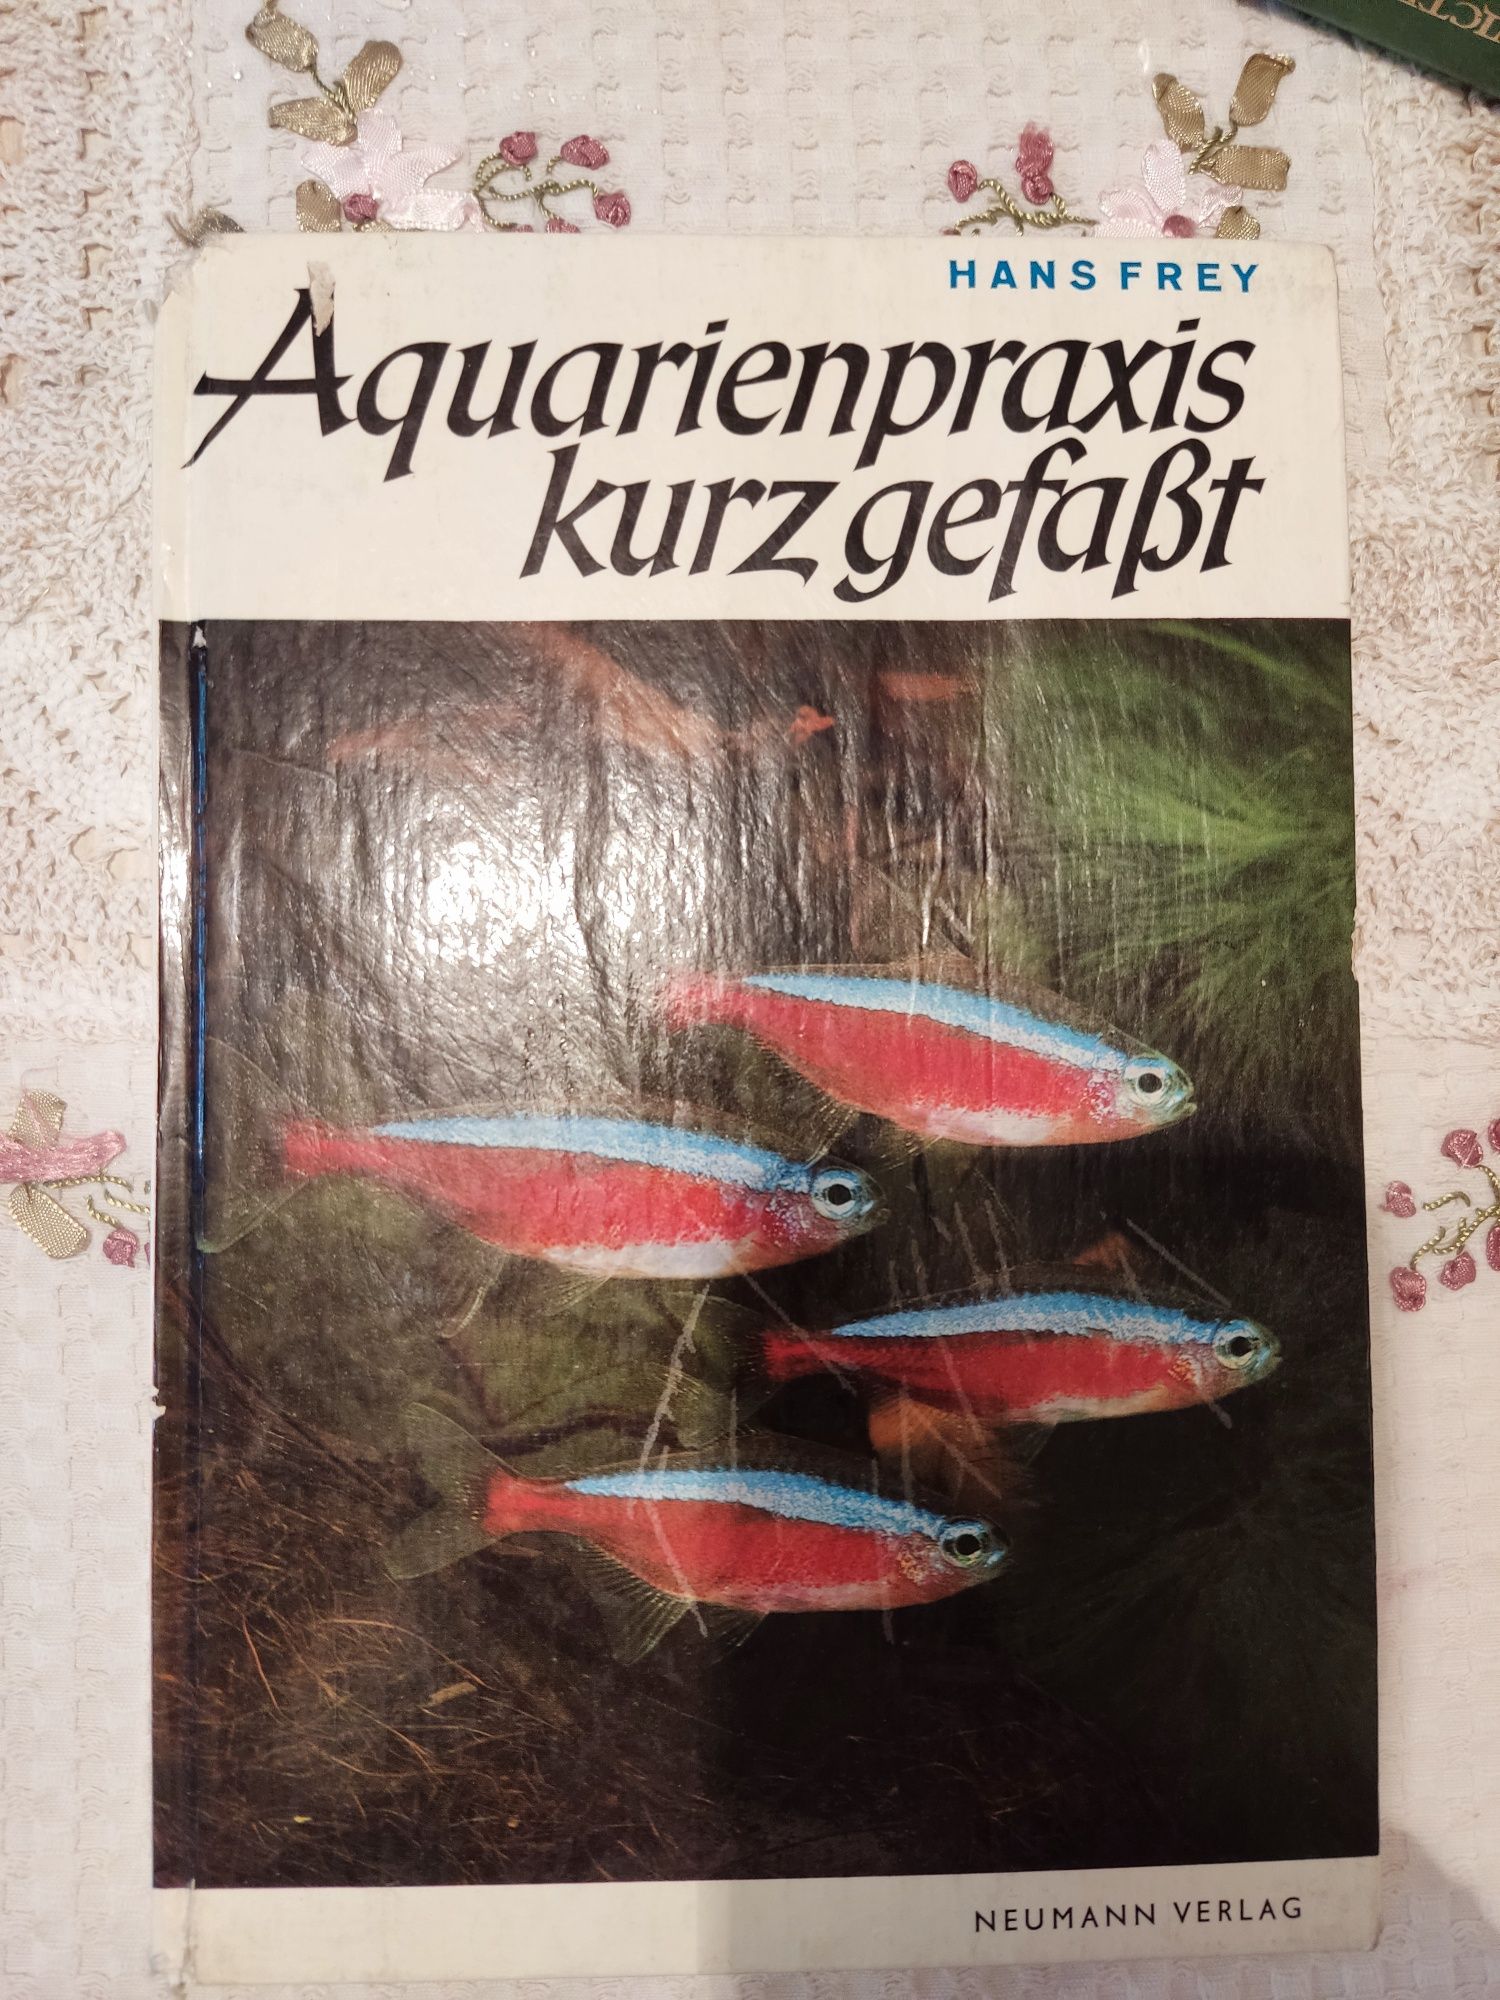 Книга комнатный аквариум.